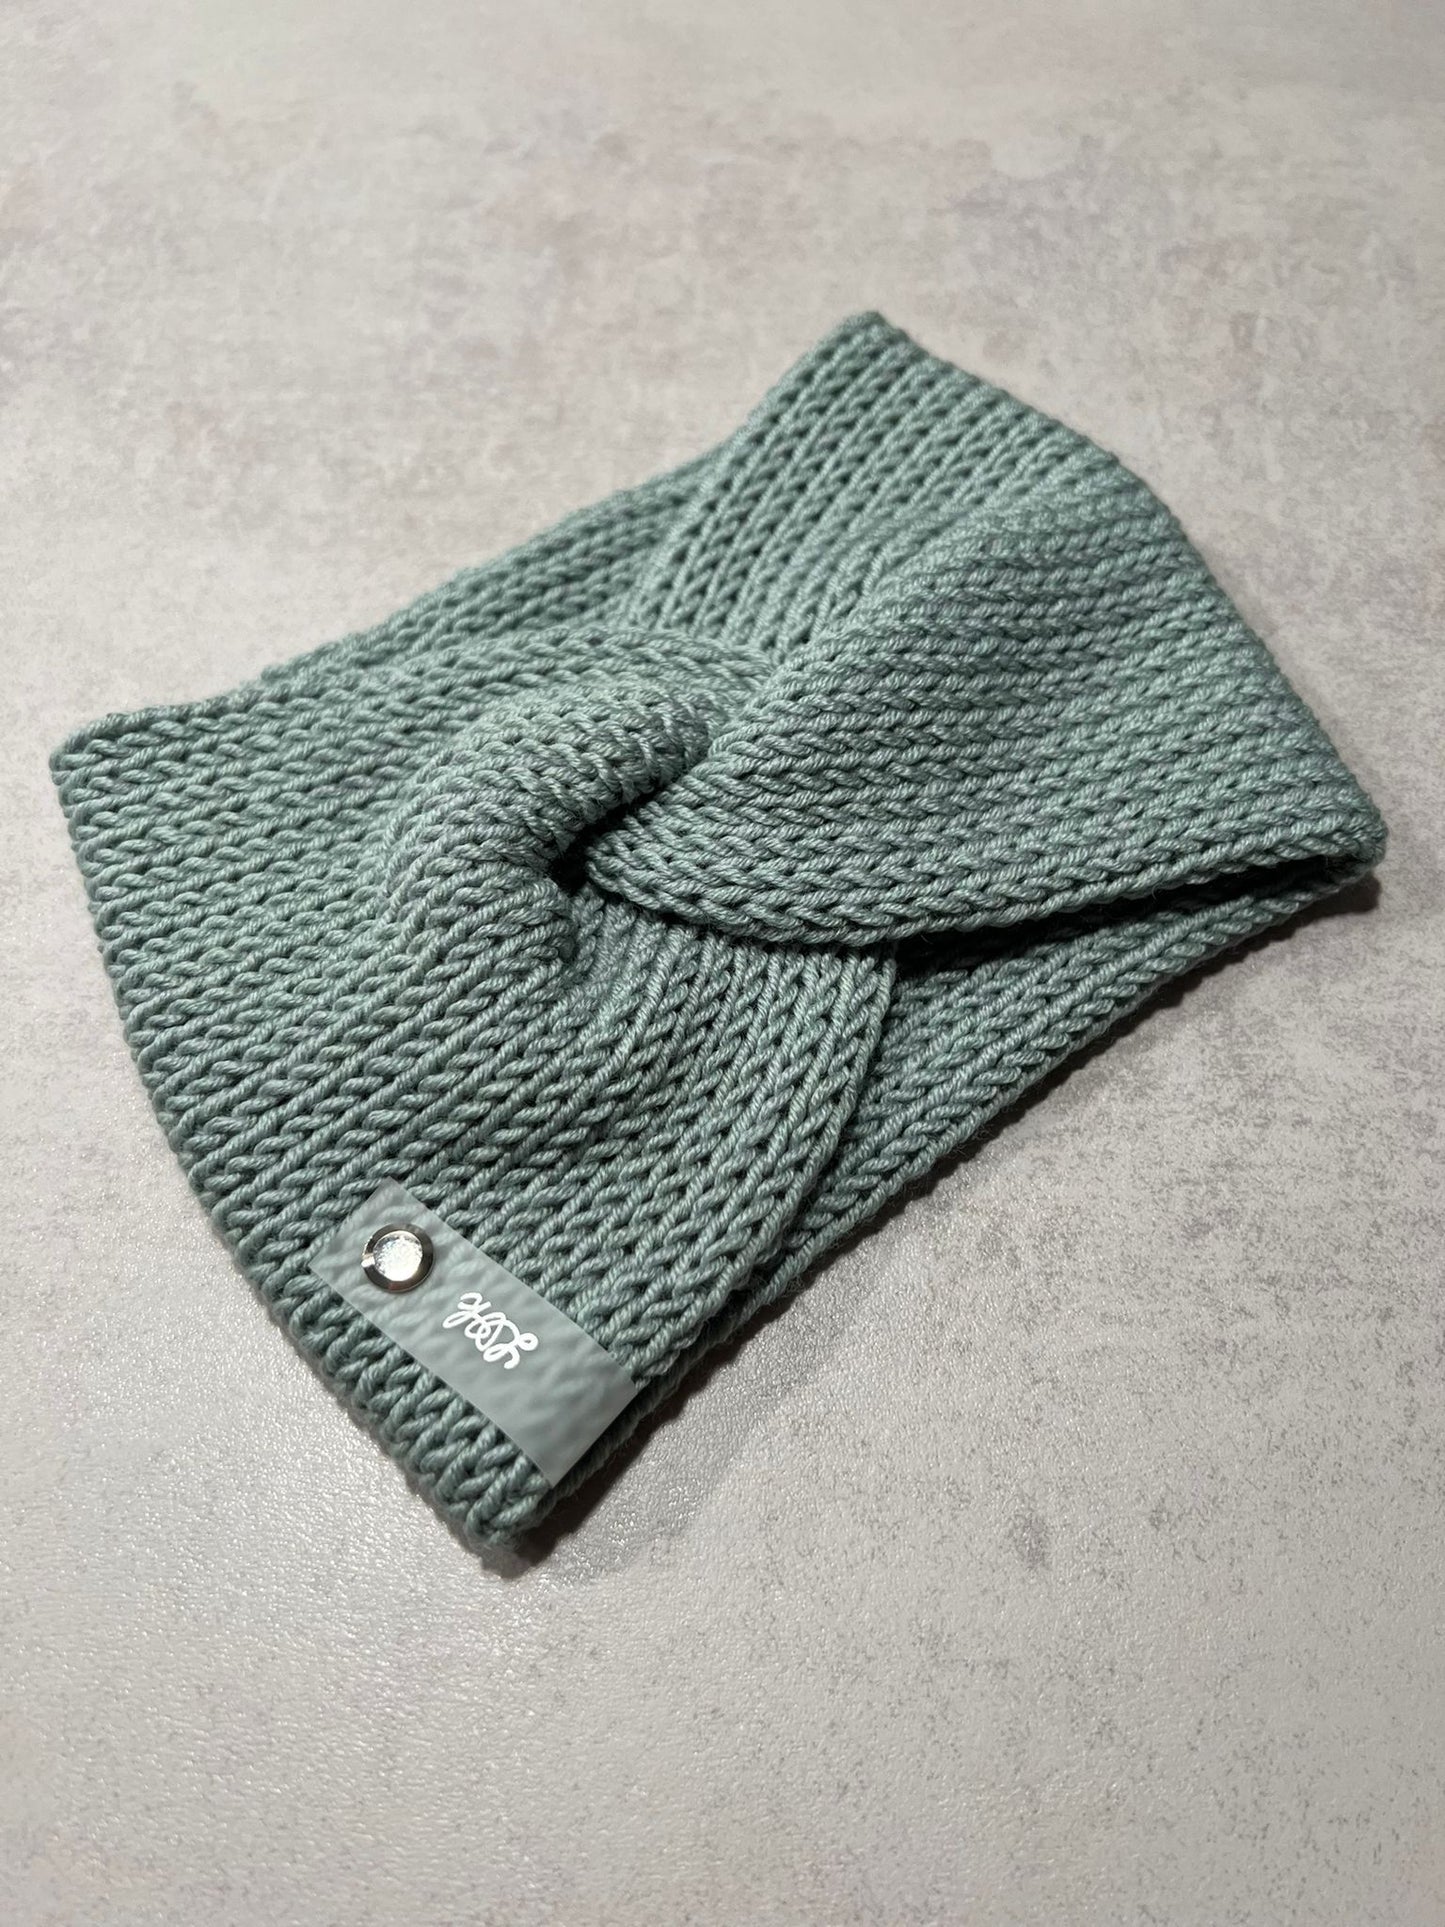 Twist headband made from 100% merino wool